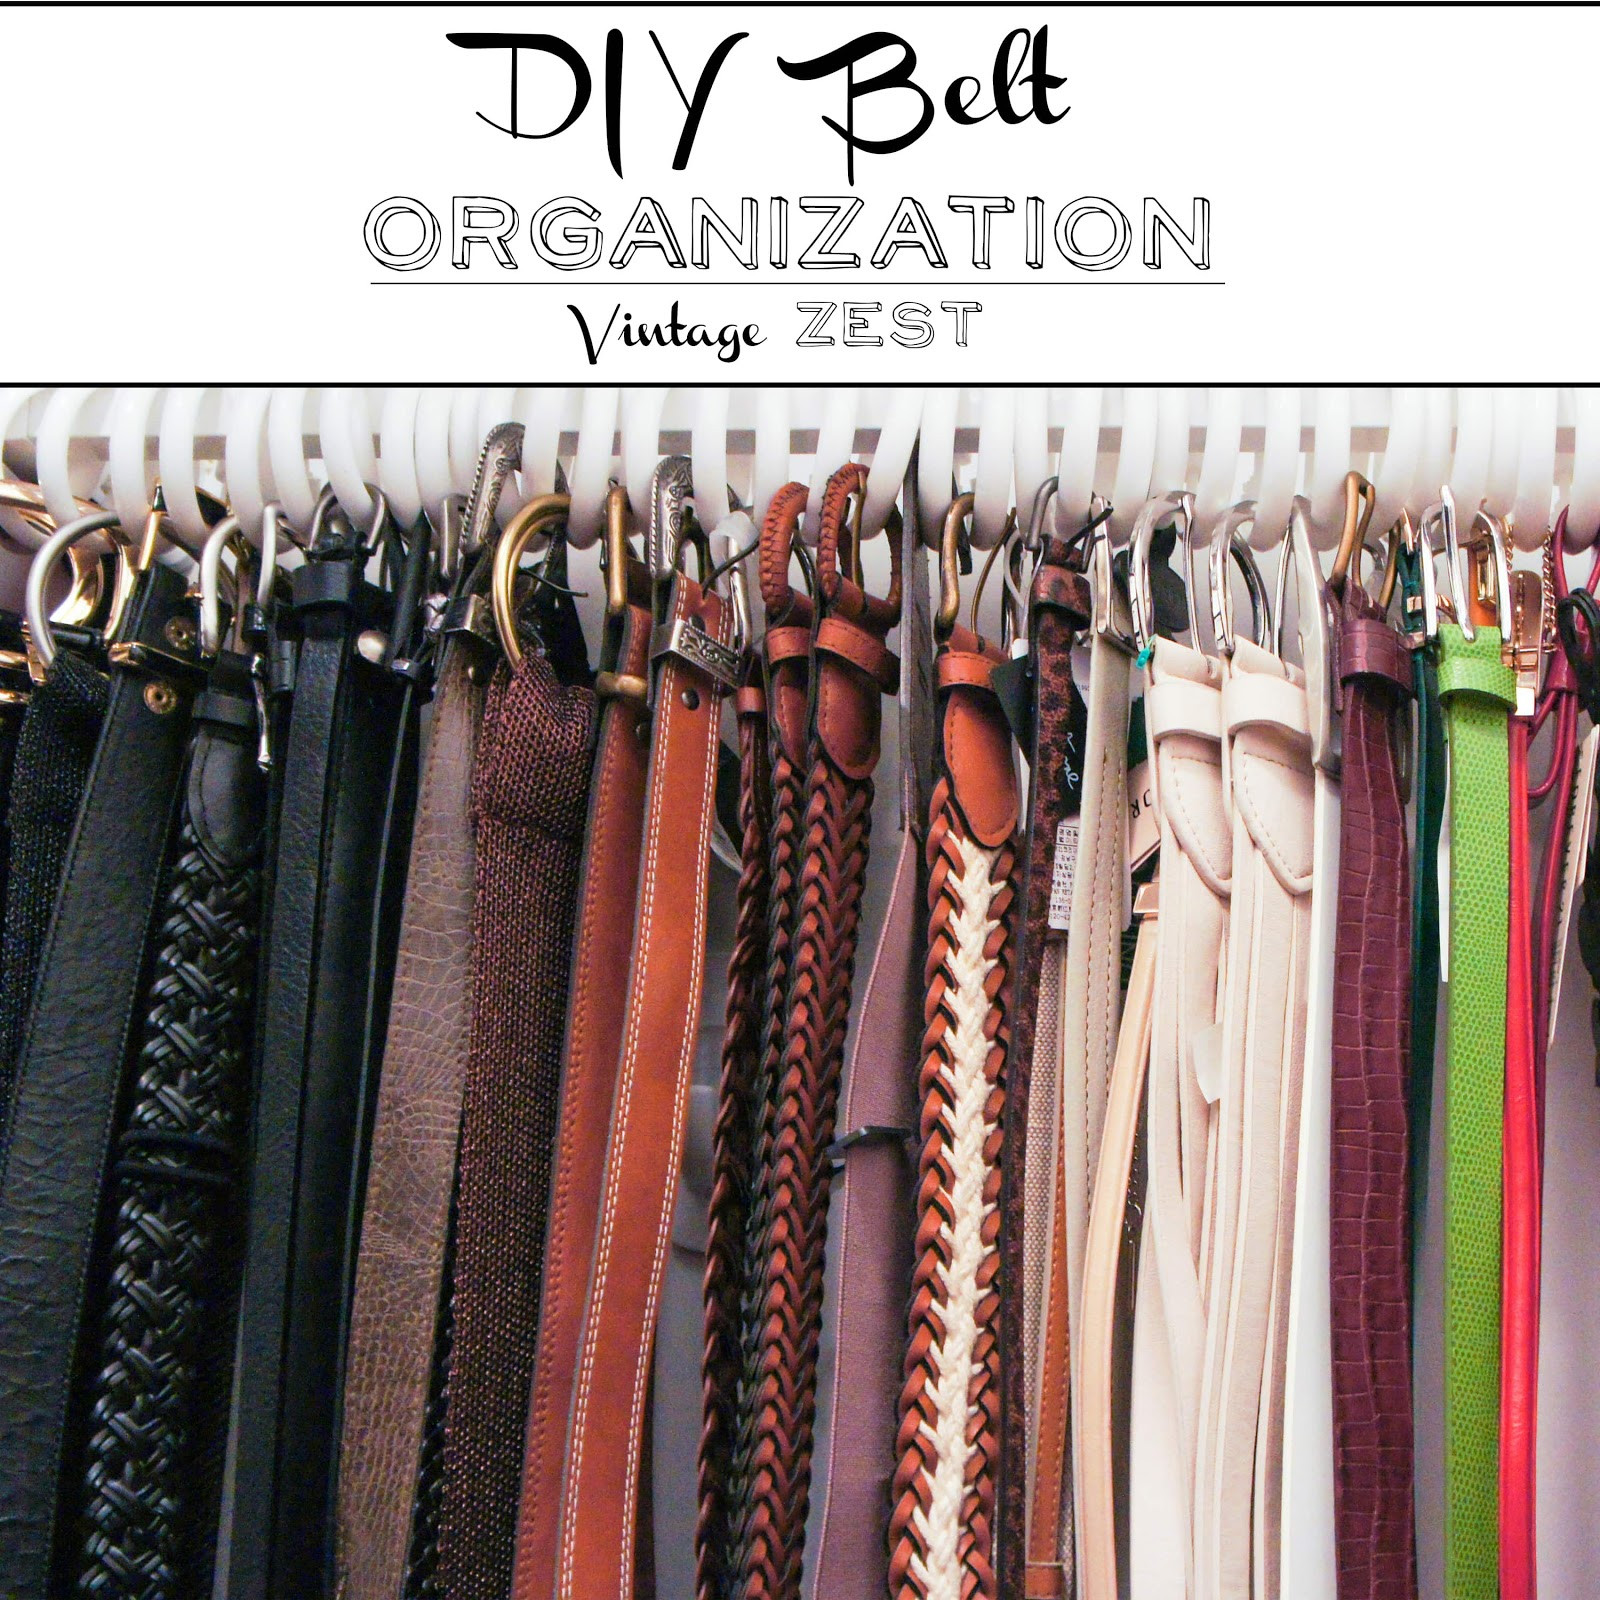 DIY Belt Organizer
 DIY Belt Organization on a bud Diane s Vintage Zest